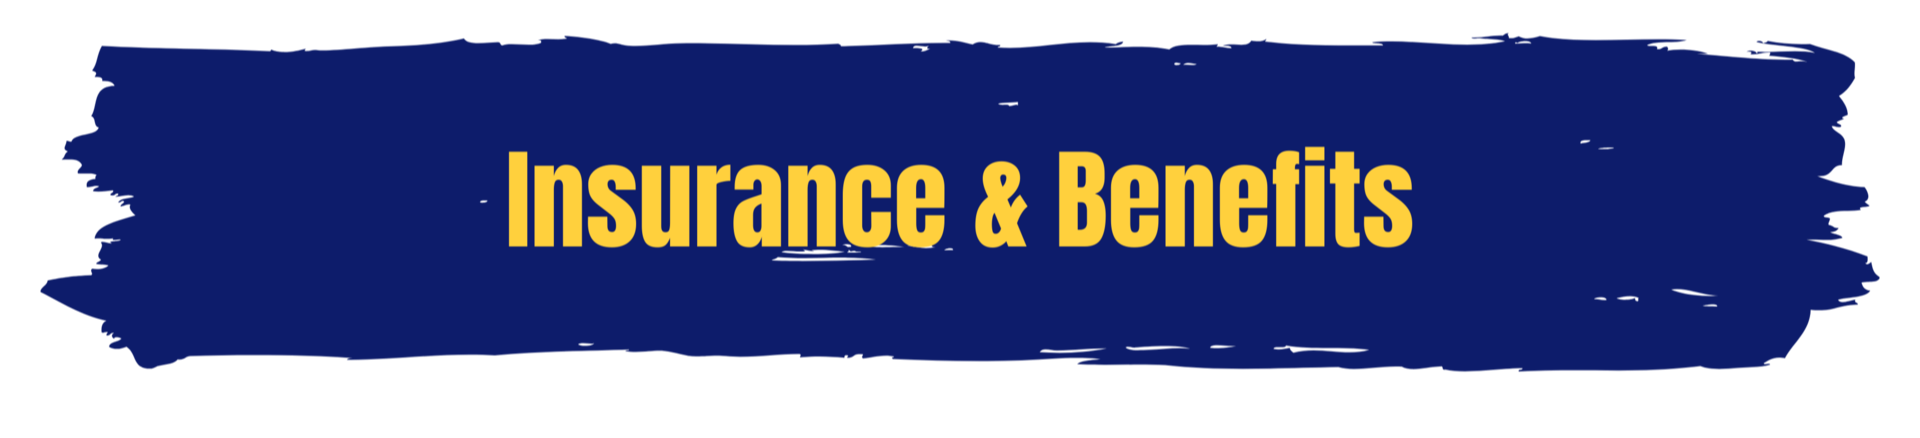 Insurance & Benefits